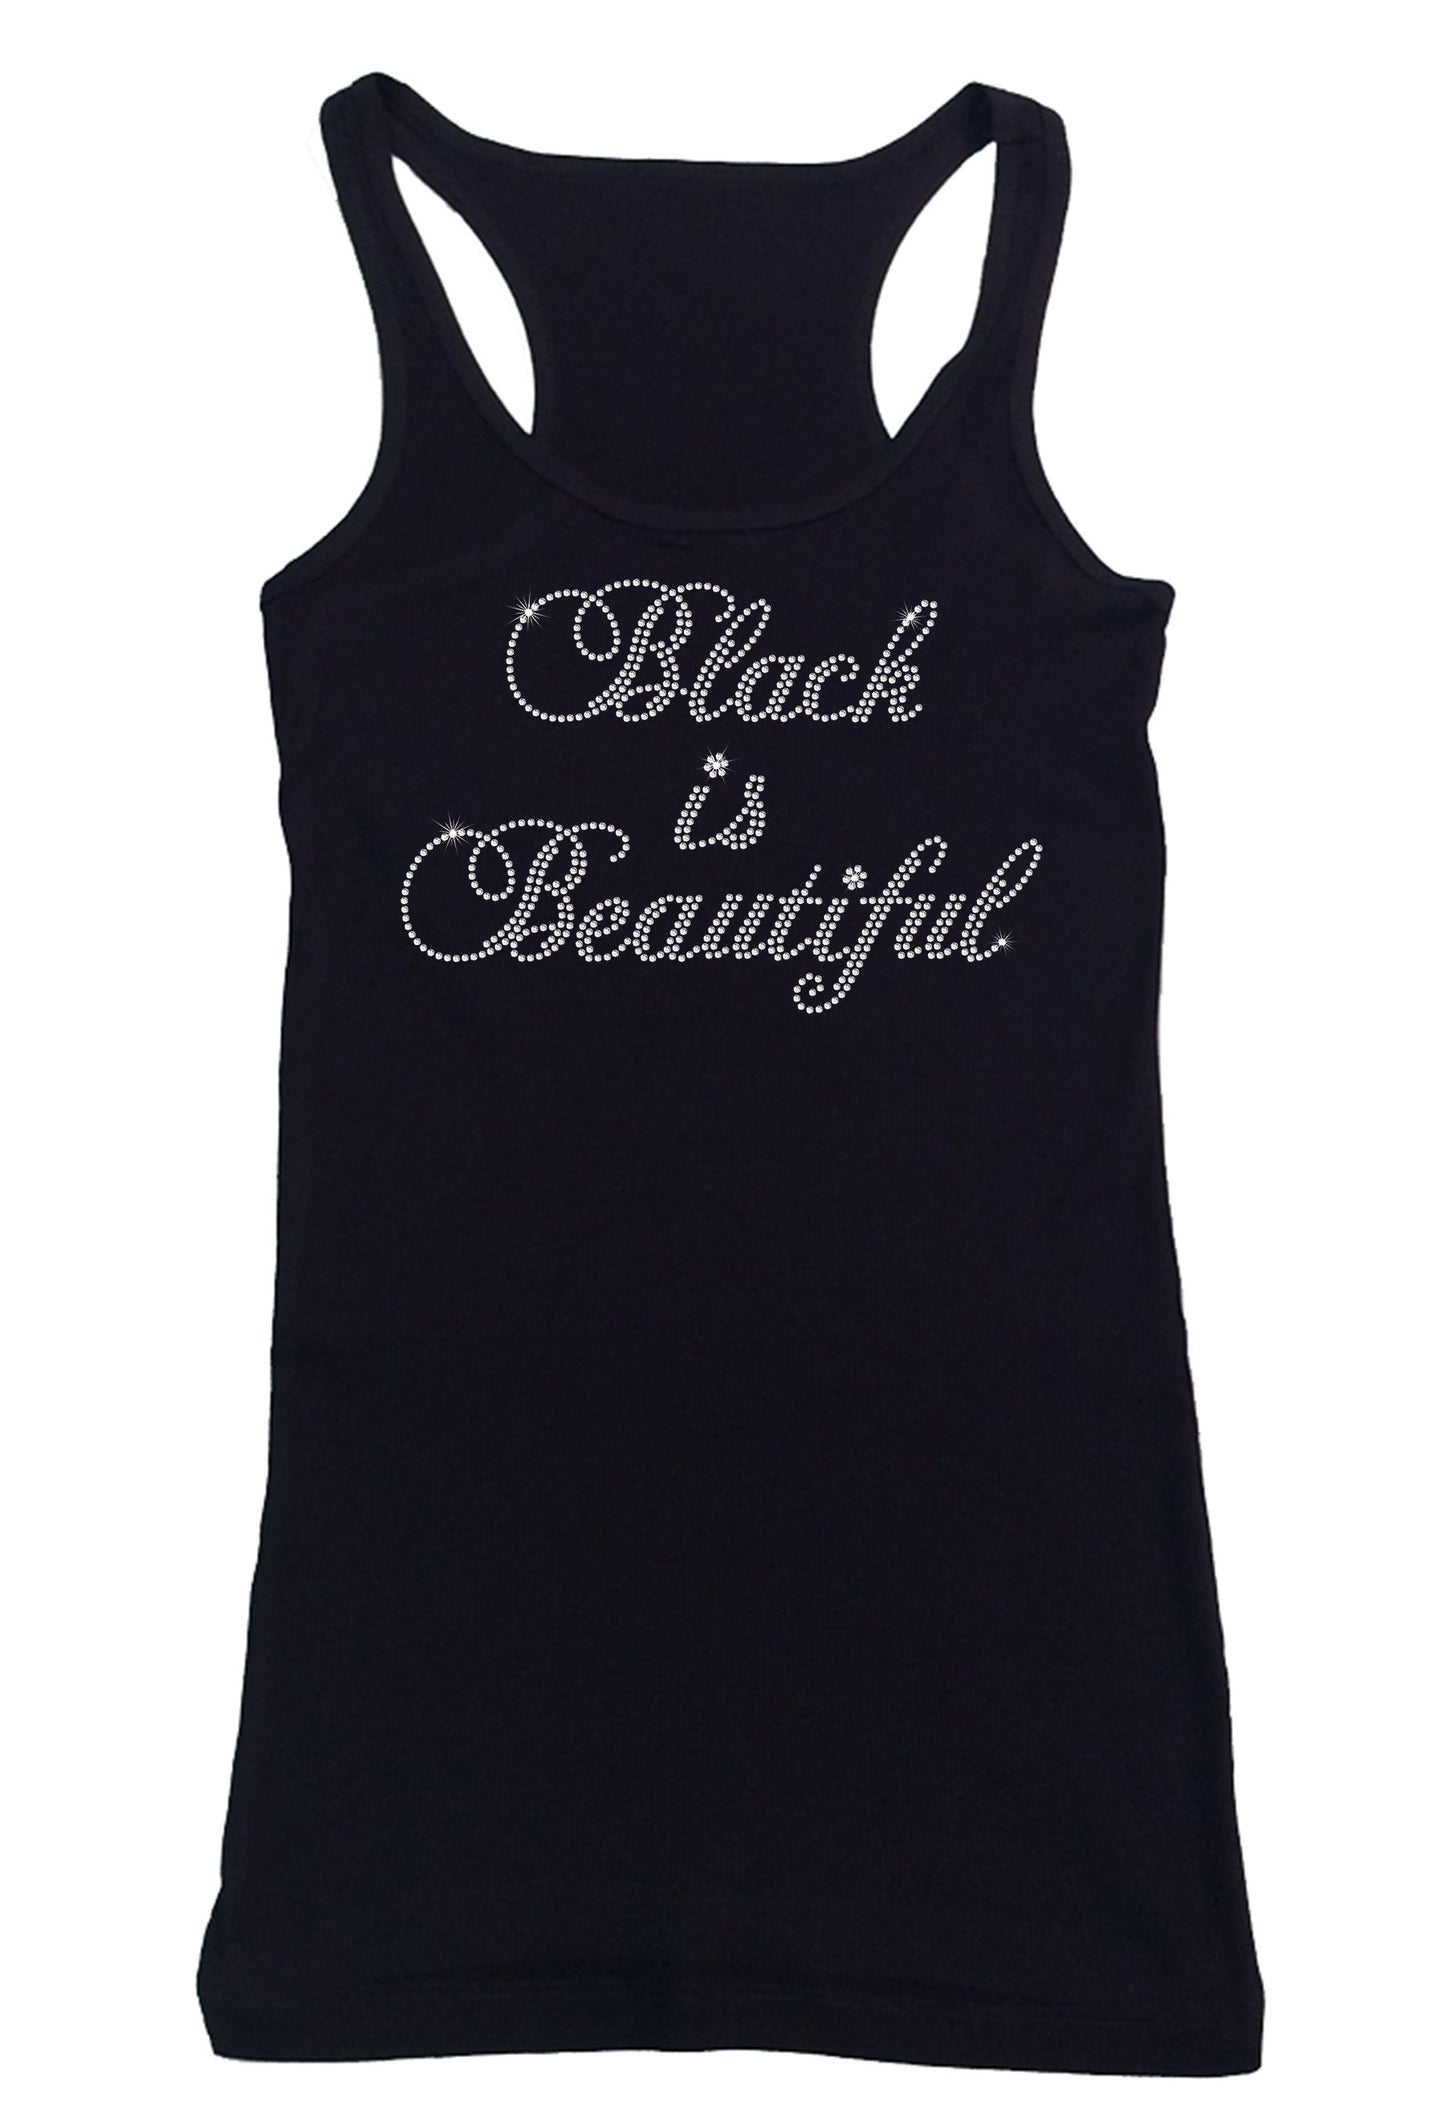 Womens T-shirt with Black is Beautiful Script in Rhinestones